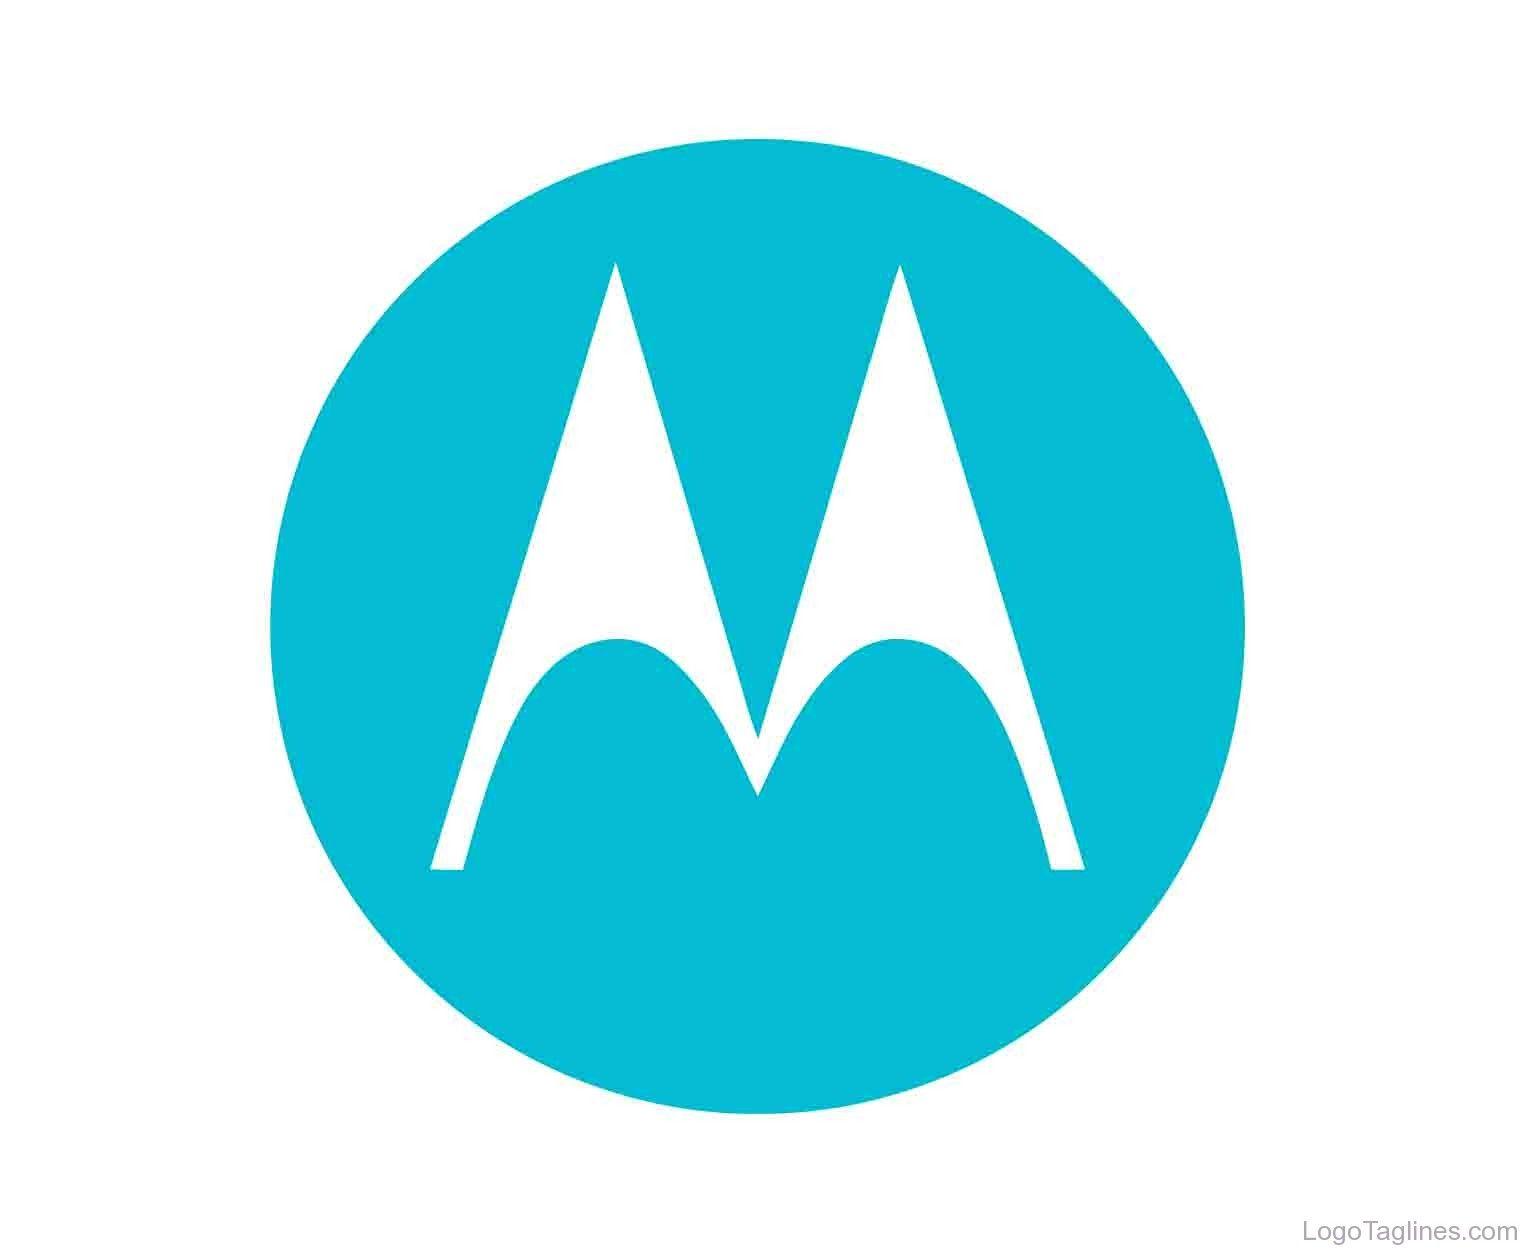 Motorola 2018 Logo - Motorola Logo and Tagline -